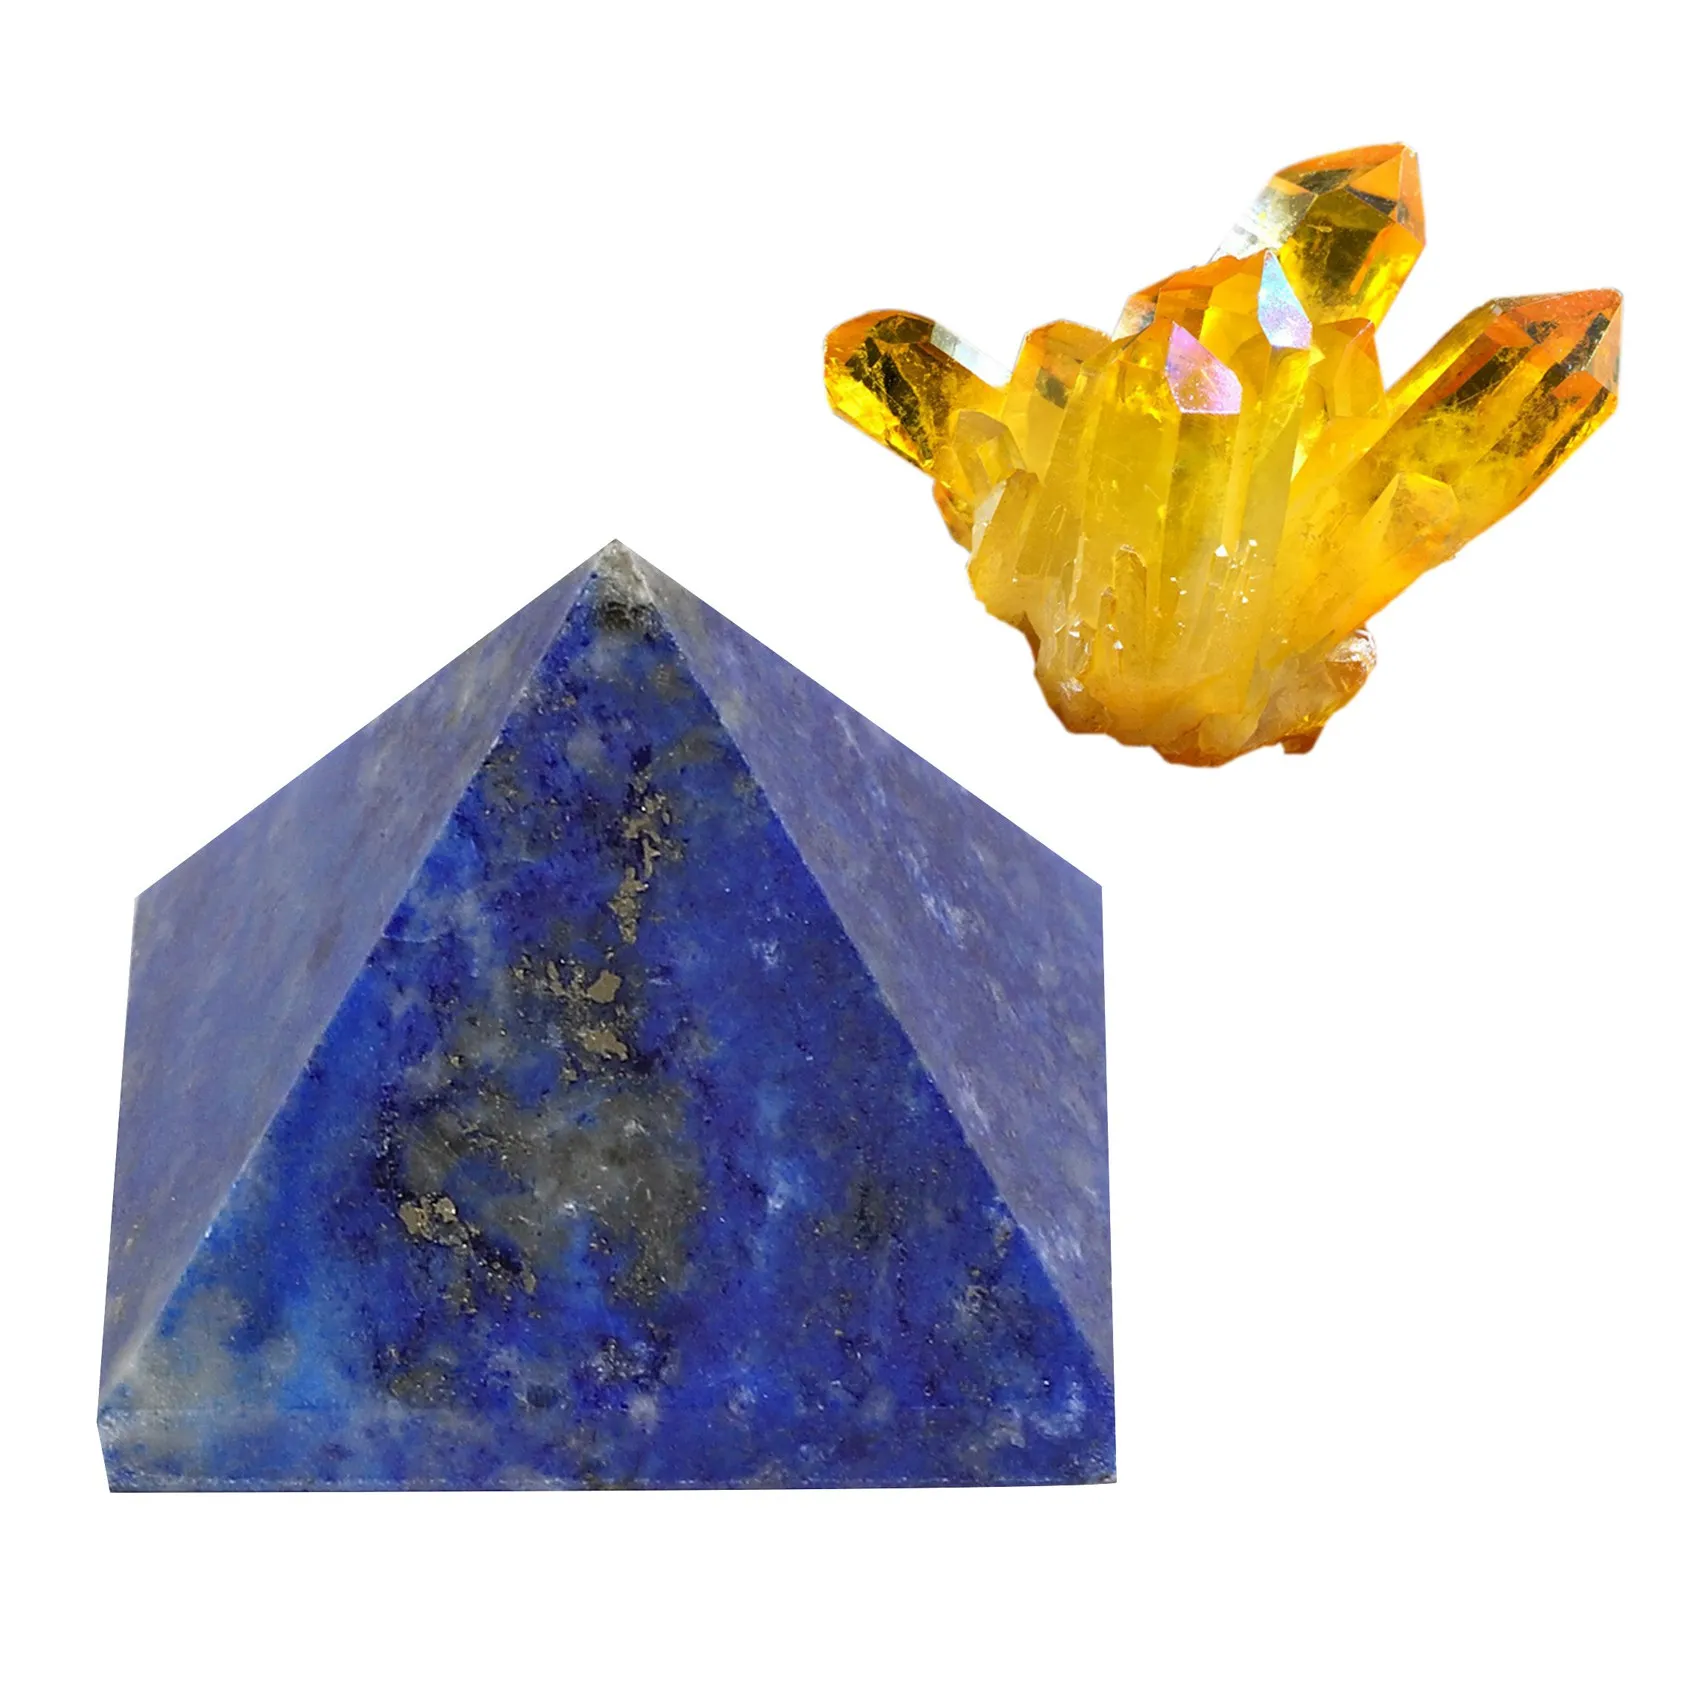 

2 Pcs Home Decor: 1 Pcs Natural Lapis Lazuli Crystal Pyramid Tower 3cm & 1 Pcs Citrine Cluster Crystal Original Stone